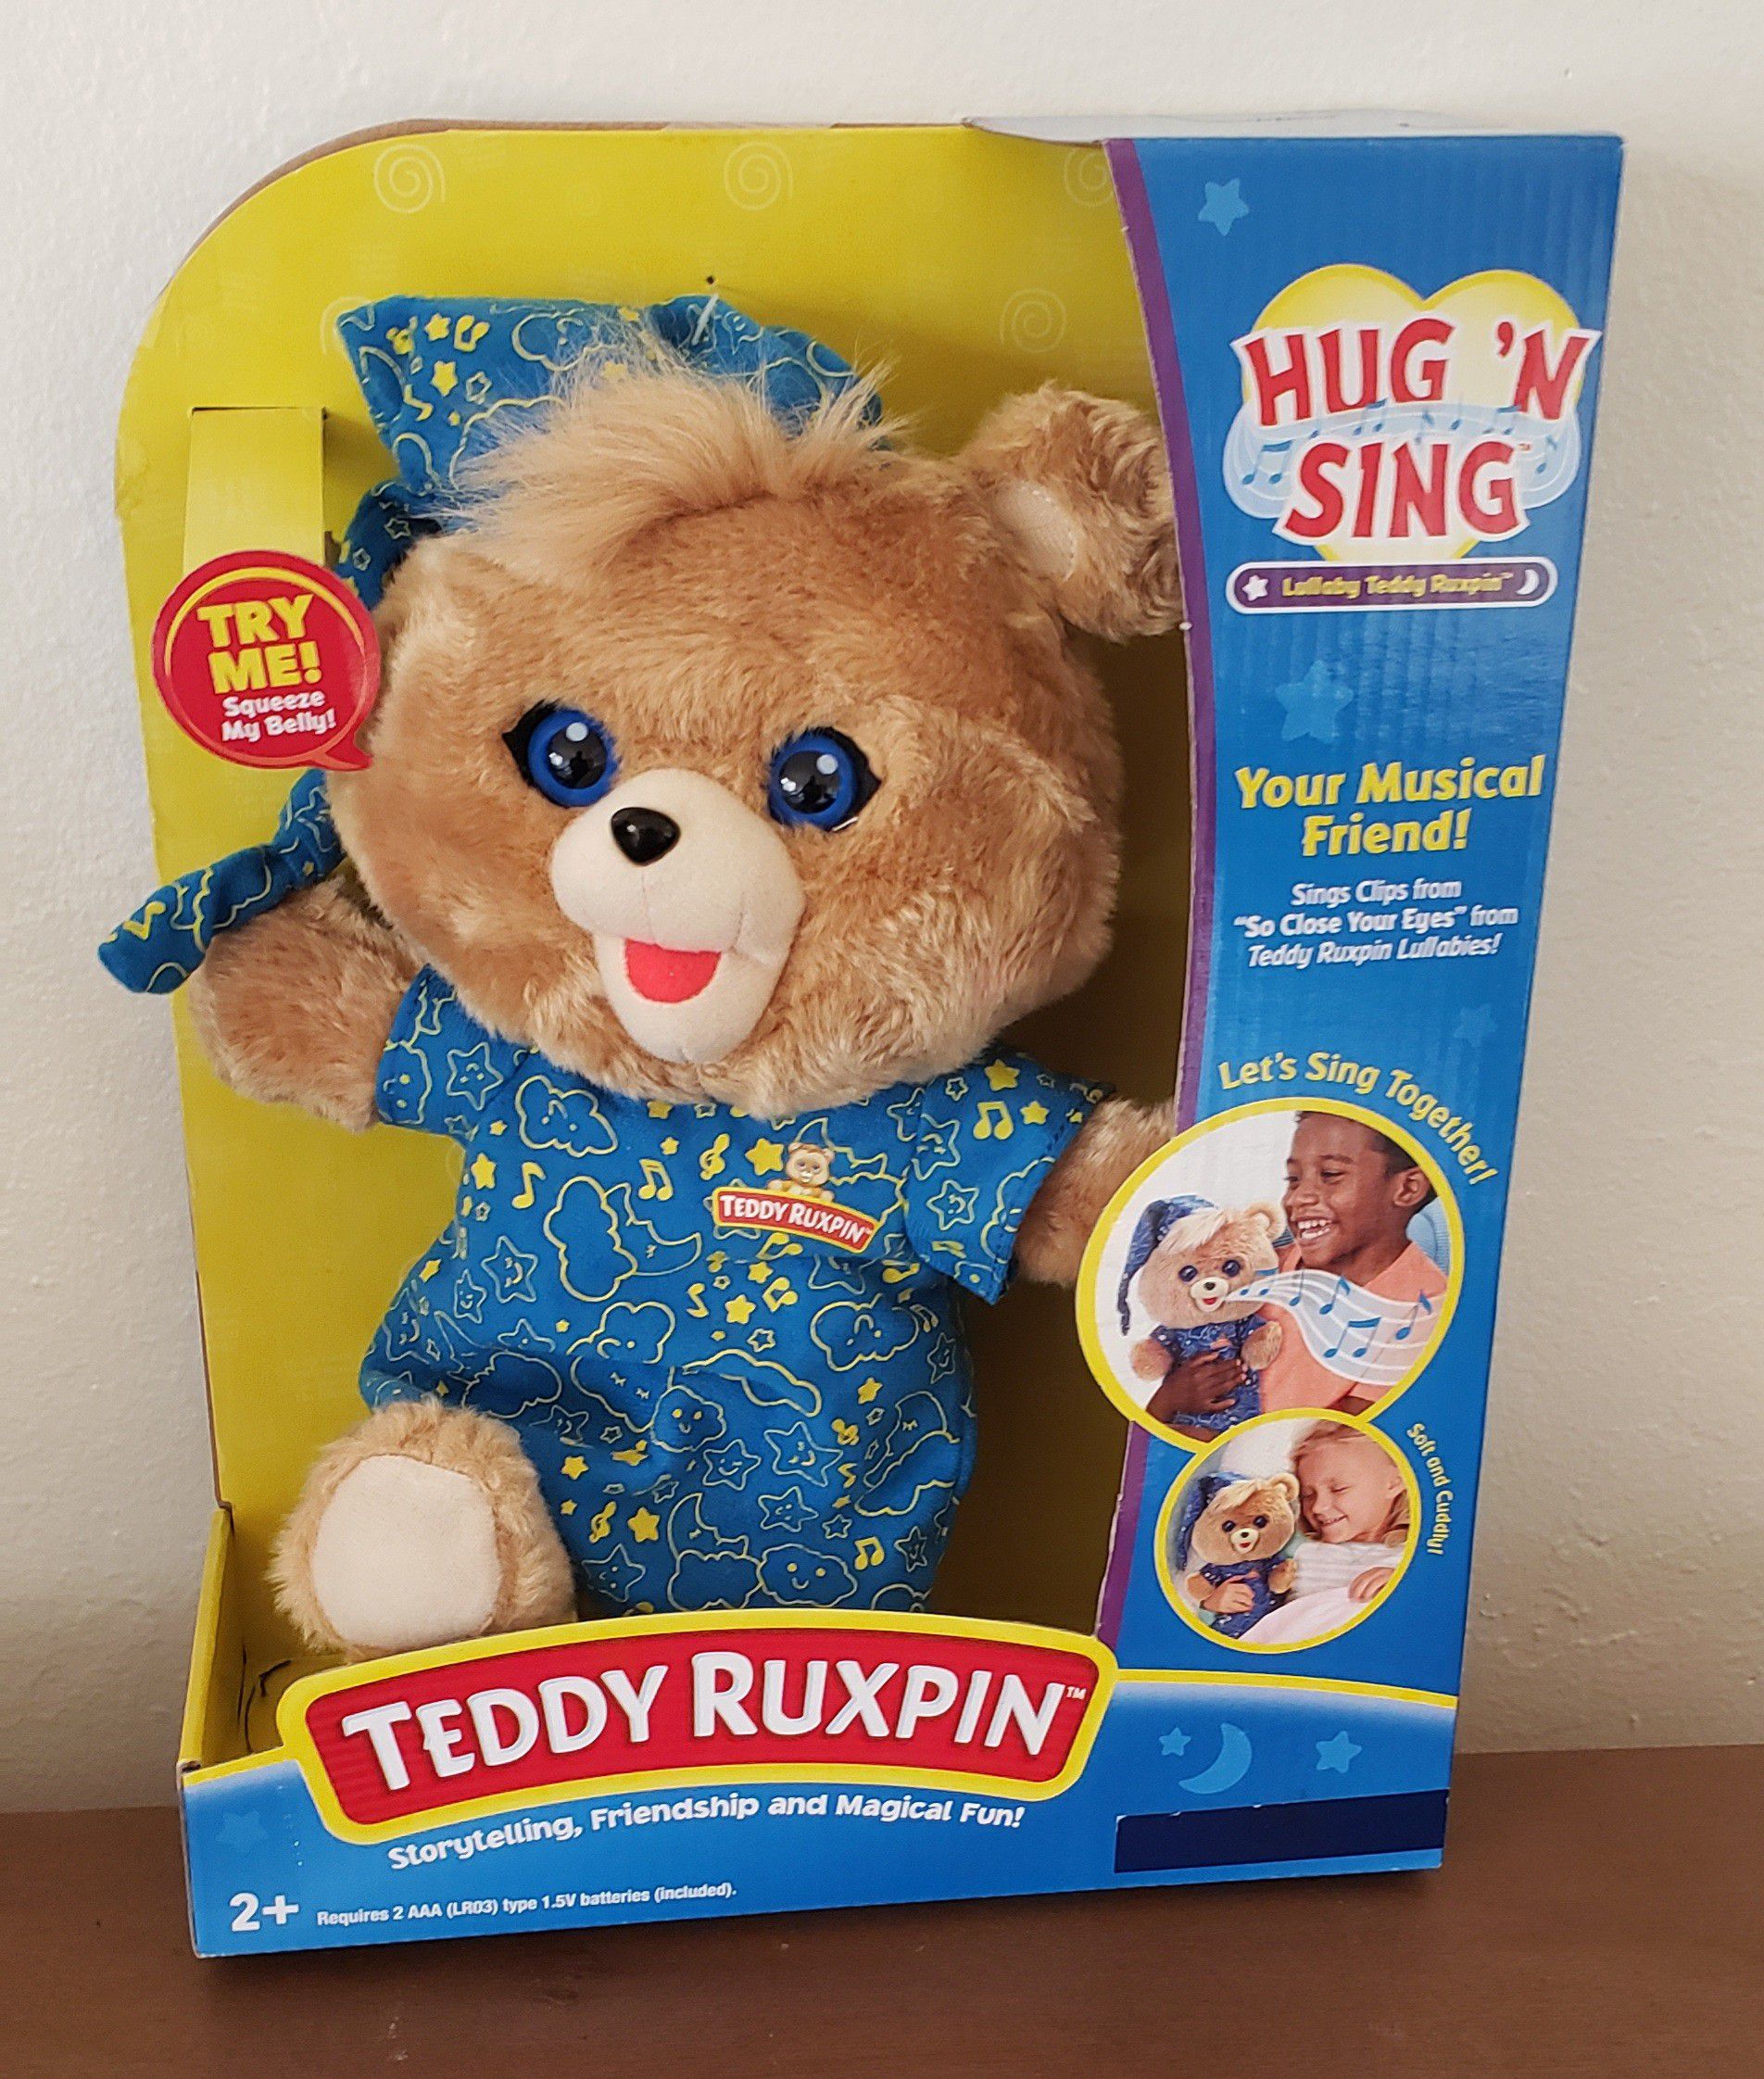 Teddy Ruxpin Hug N Sing